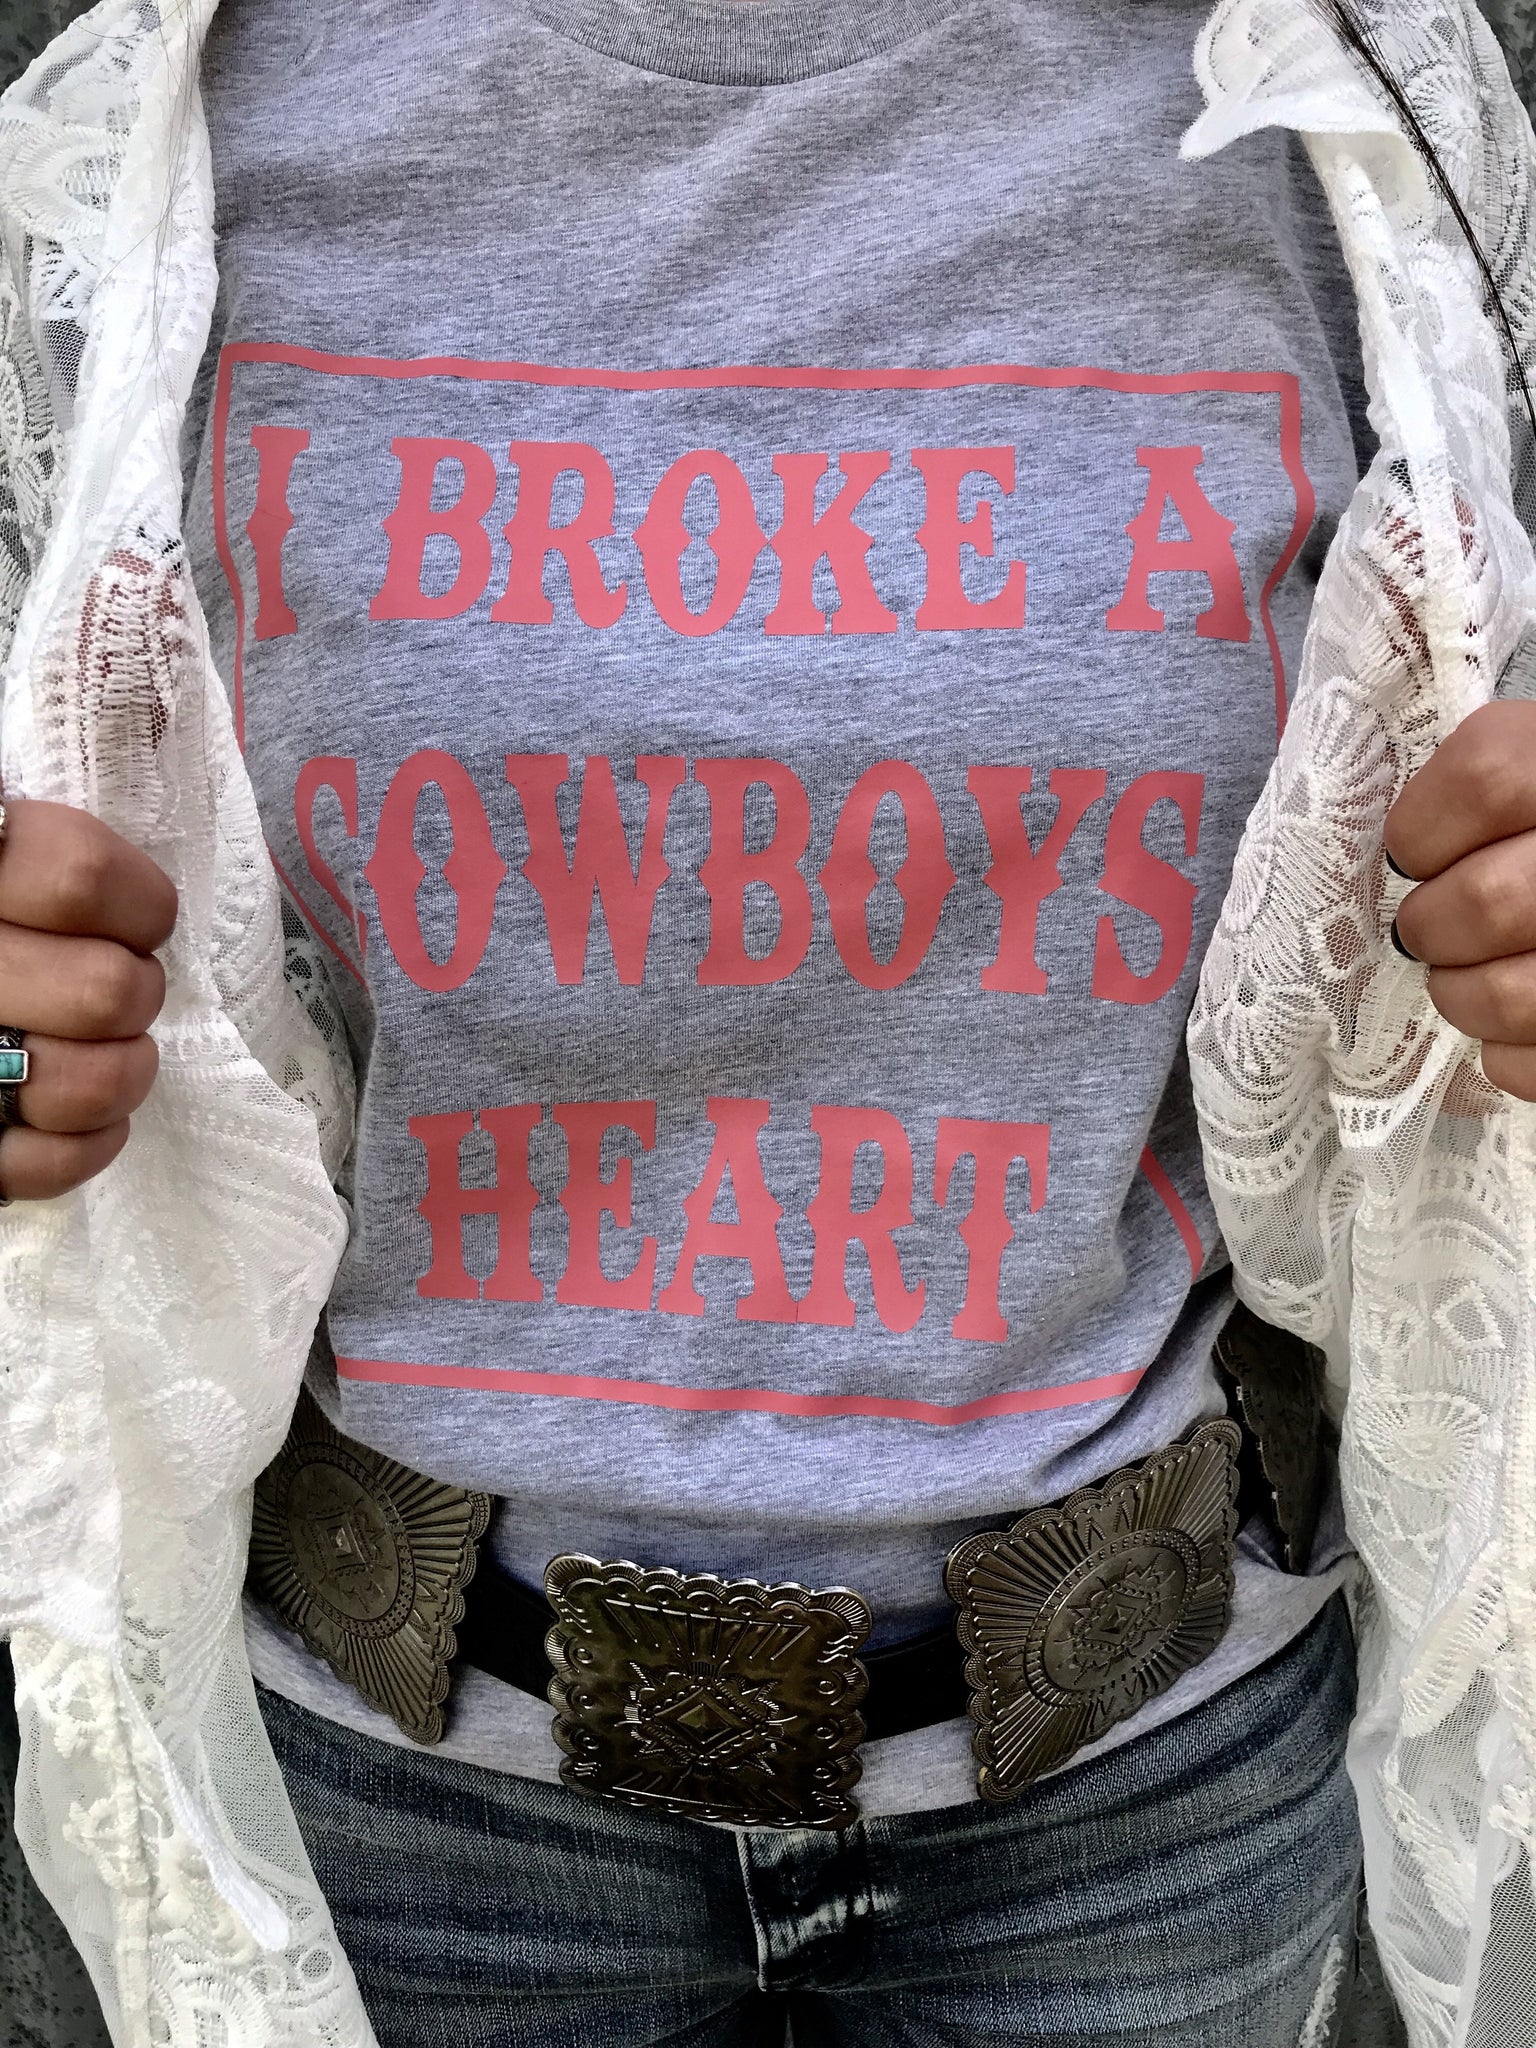 I broke a cowboys heart tee